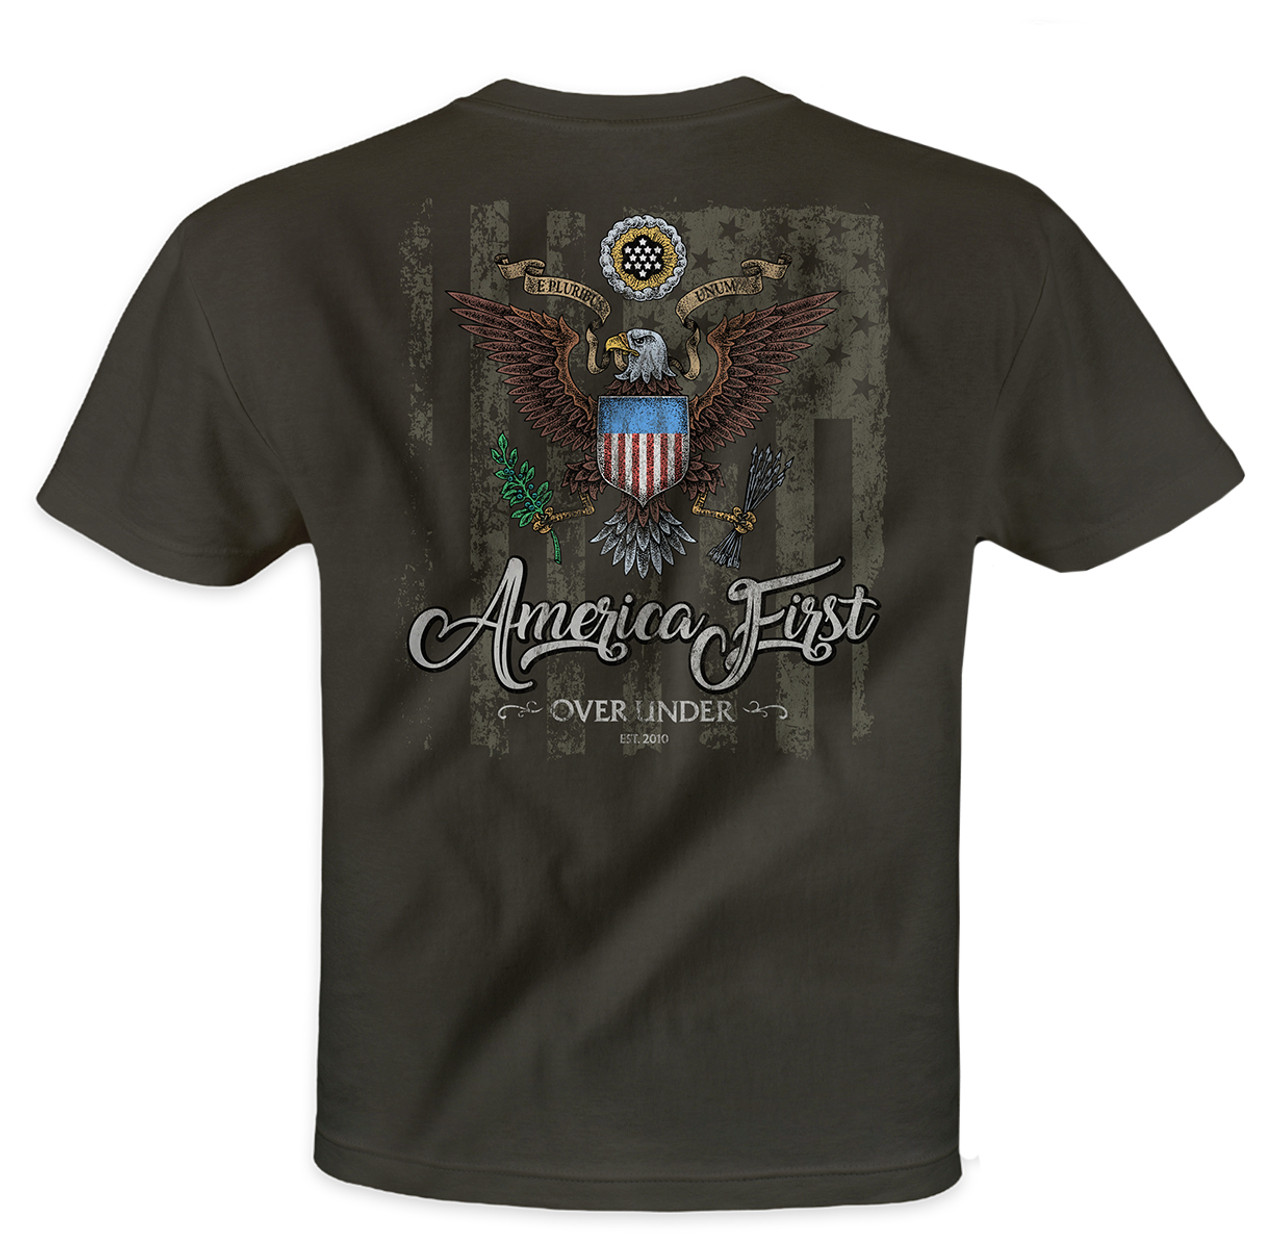 Over Under Iron Eagle Short Sleeve T-Shirt - Southern Clothing